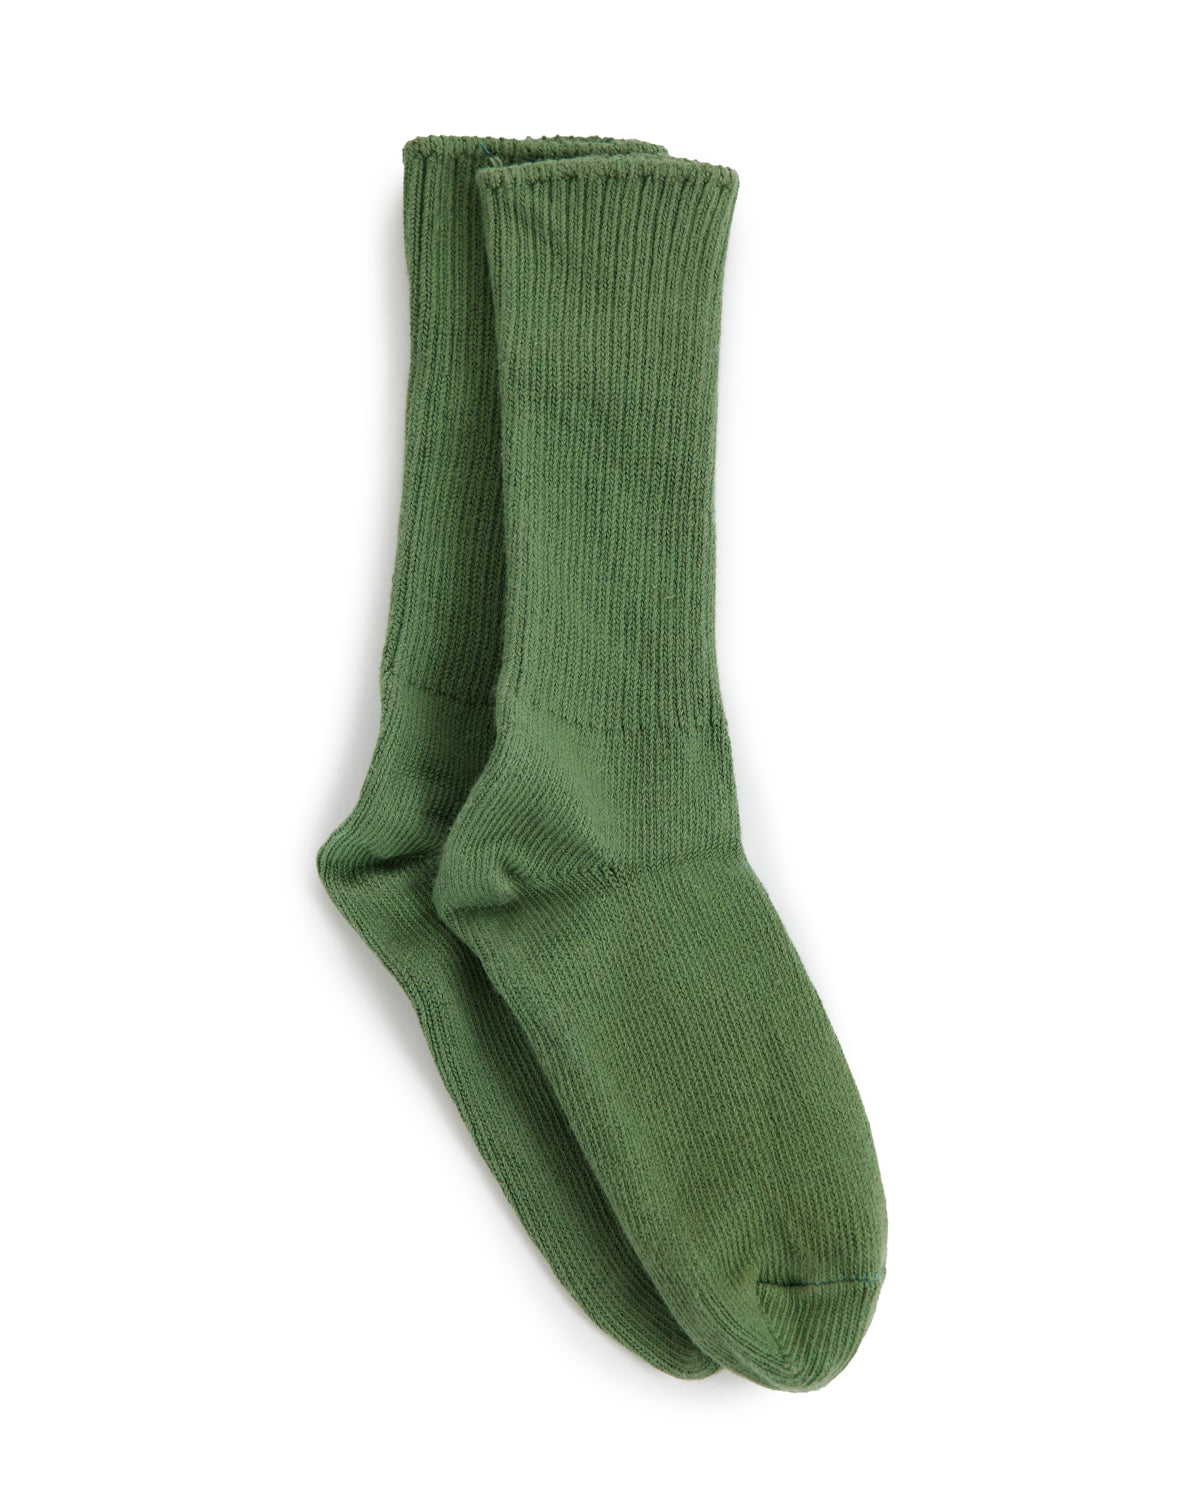 Organic Cotton Crew Socks, 1 Pair, Sage